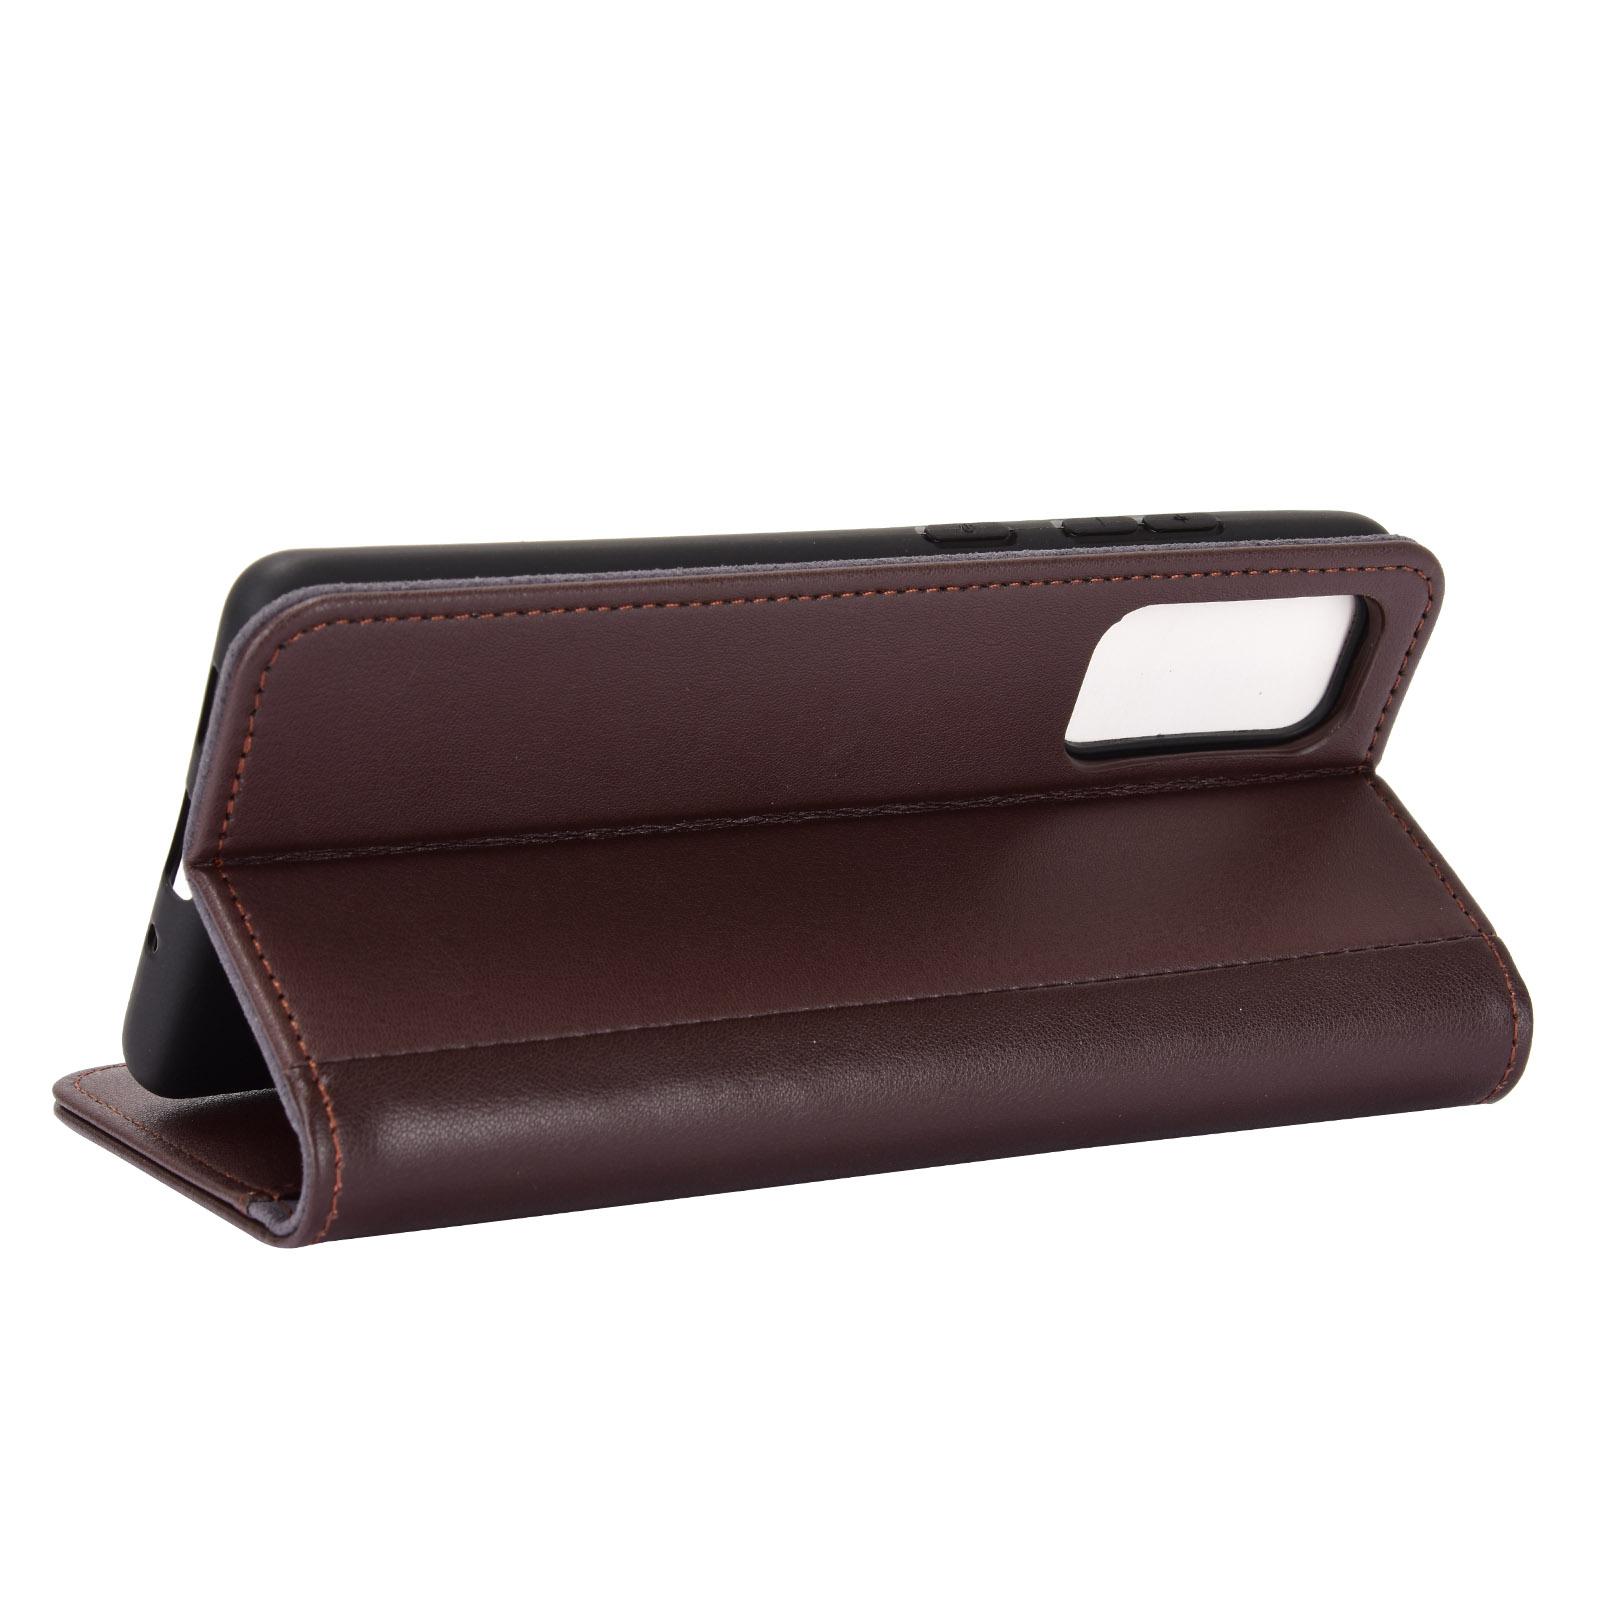 Samsung Galaxy S20 FE Genuine Leather Wallet Case Brown